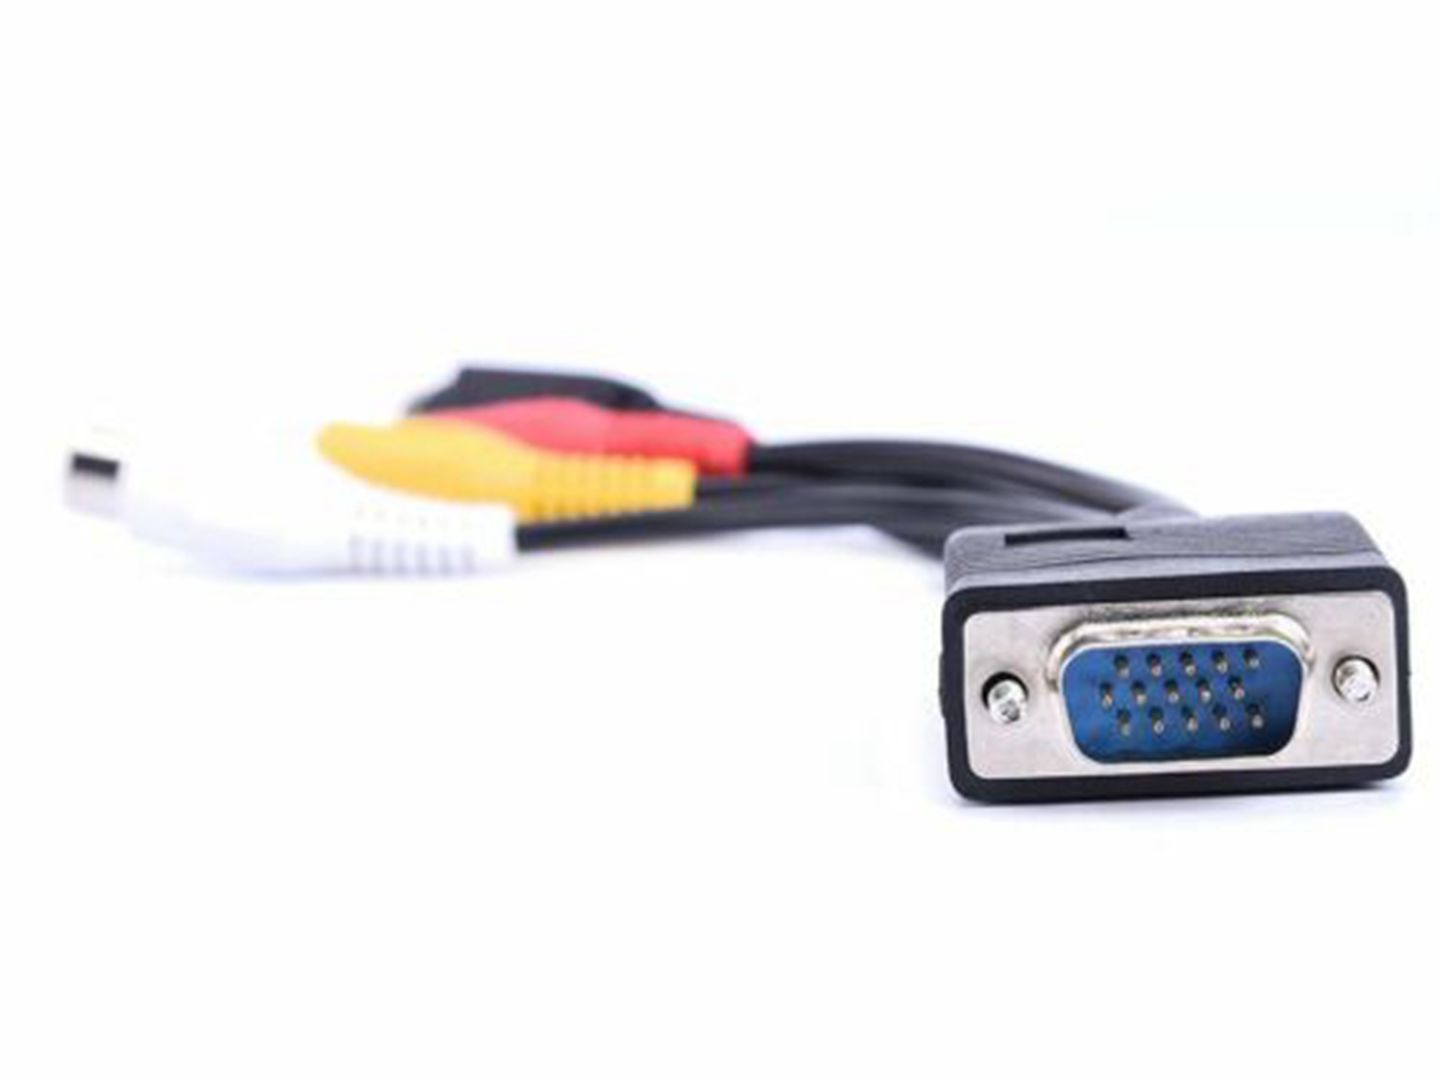 VGA to S+AV cable cord